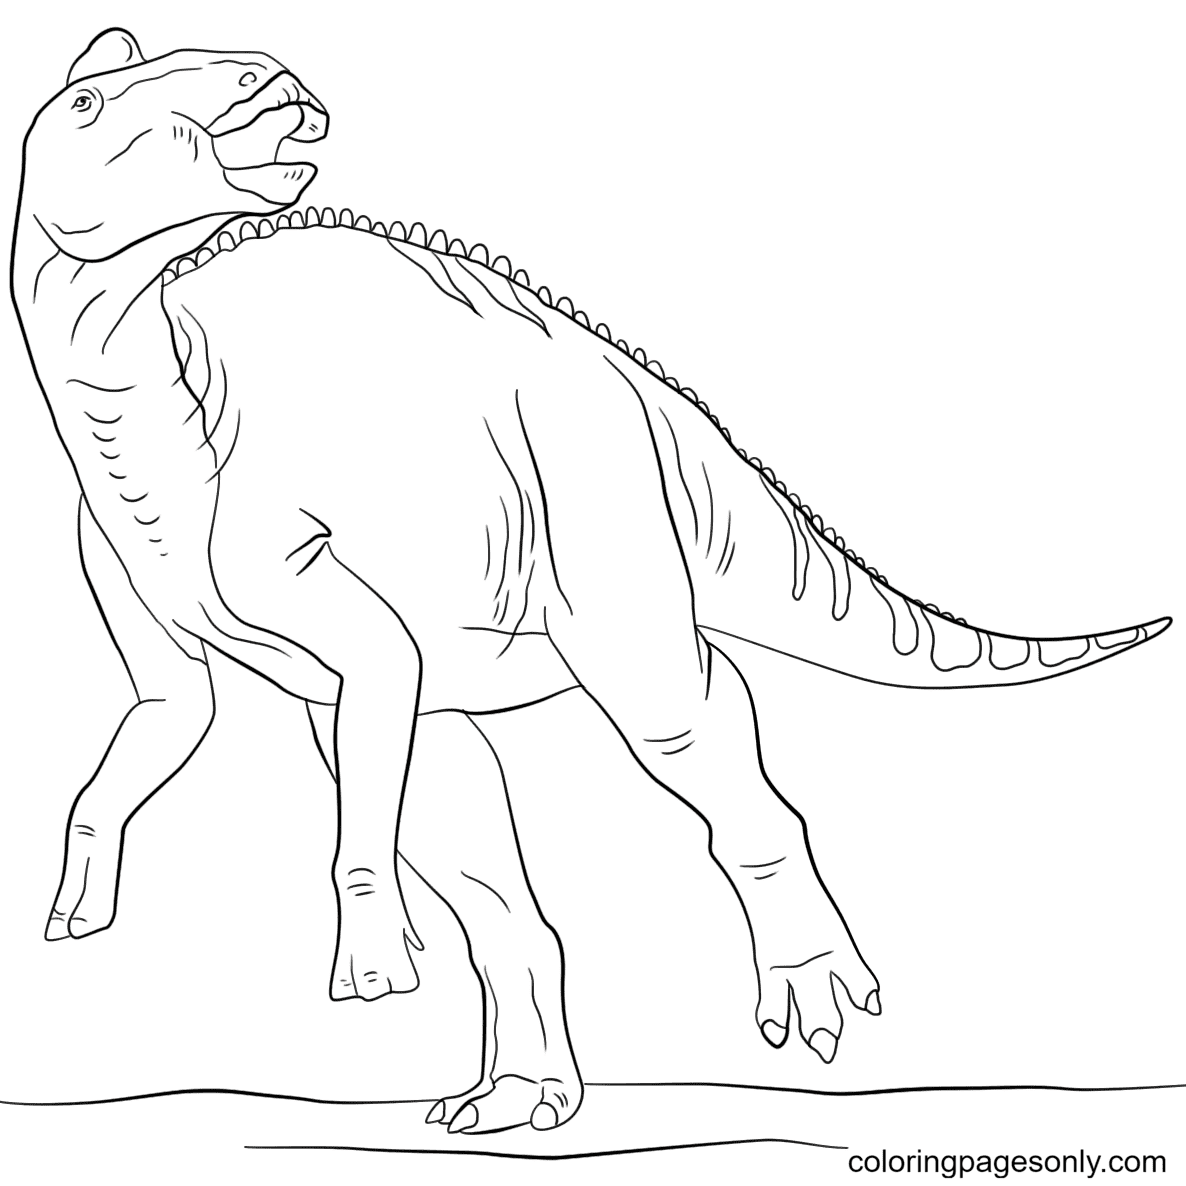 Jurassic Park Edmontosaurus Coloring Page. صفحة التلوين